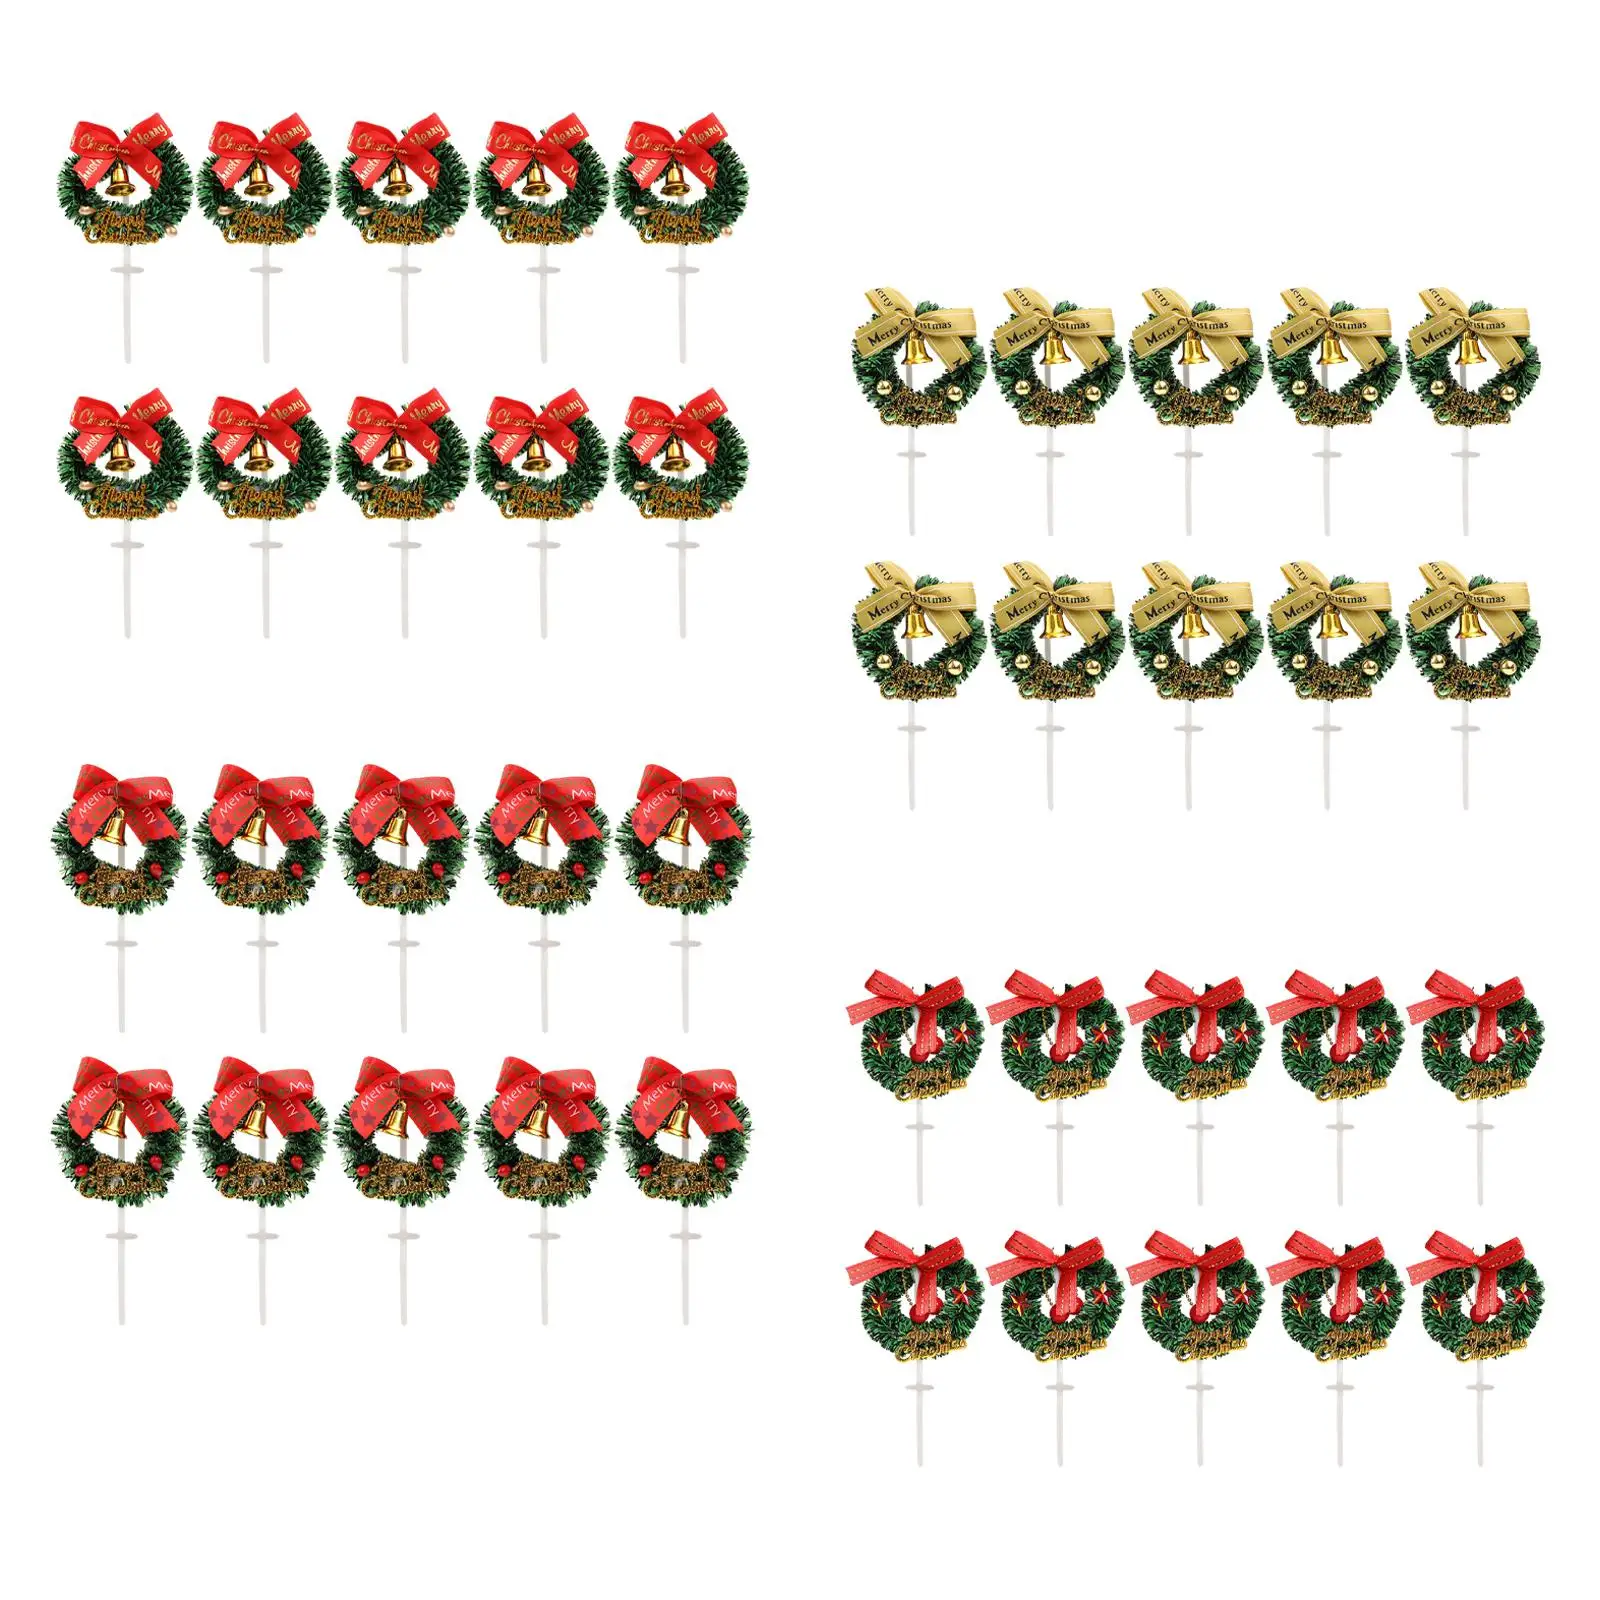 10 Pieces Mini Christmas Wreaths Home Decoration Winter Holiday Christmas Tree Decorations Cupcake Sticks Cake Decorations